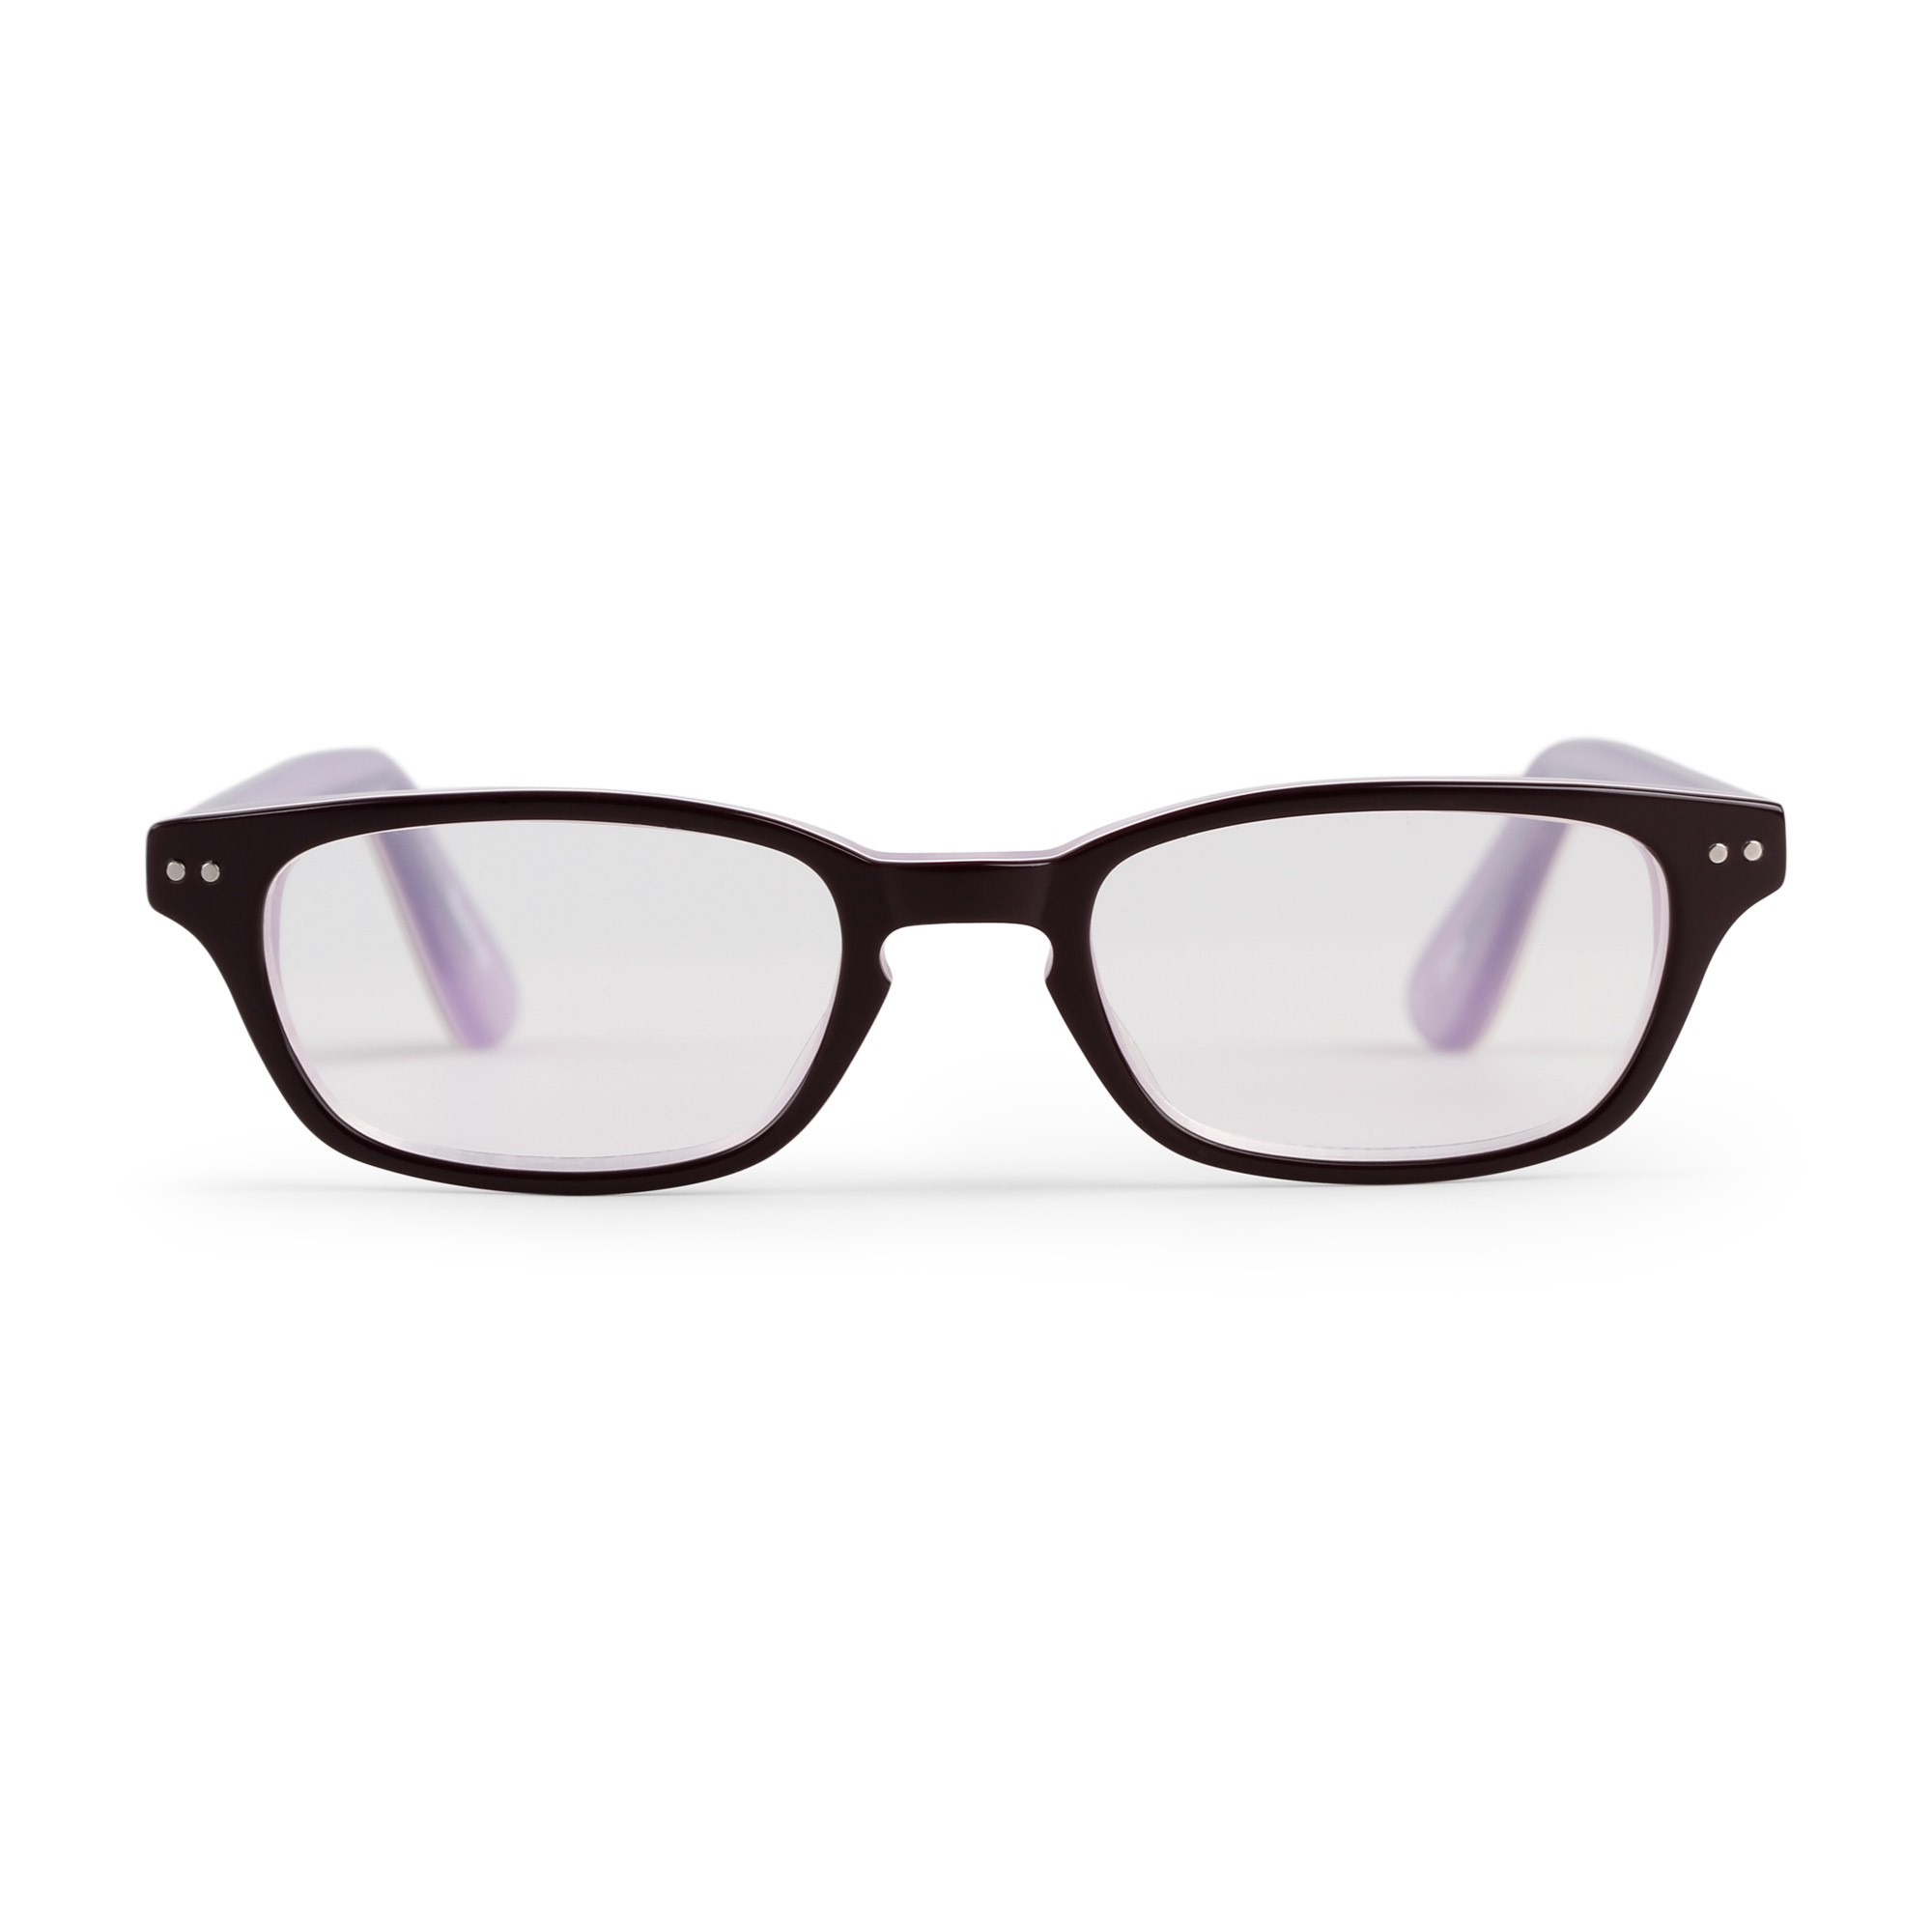 c wonder plum small square eyeglasses product 1 4908455 319203751